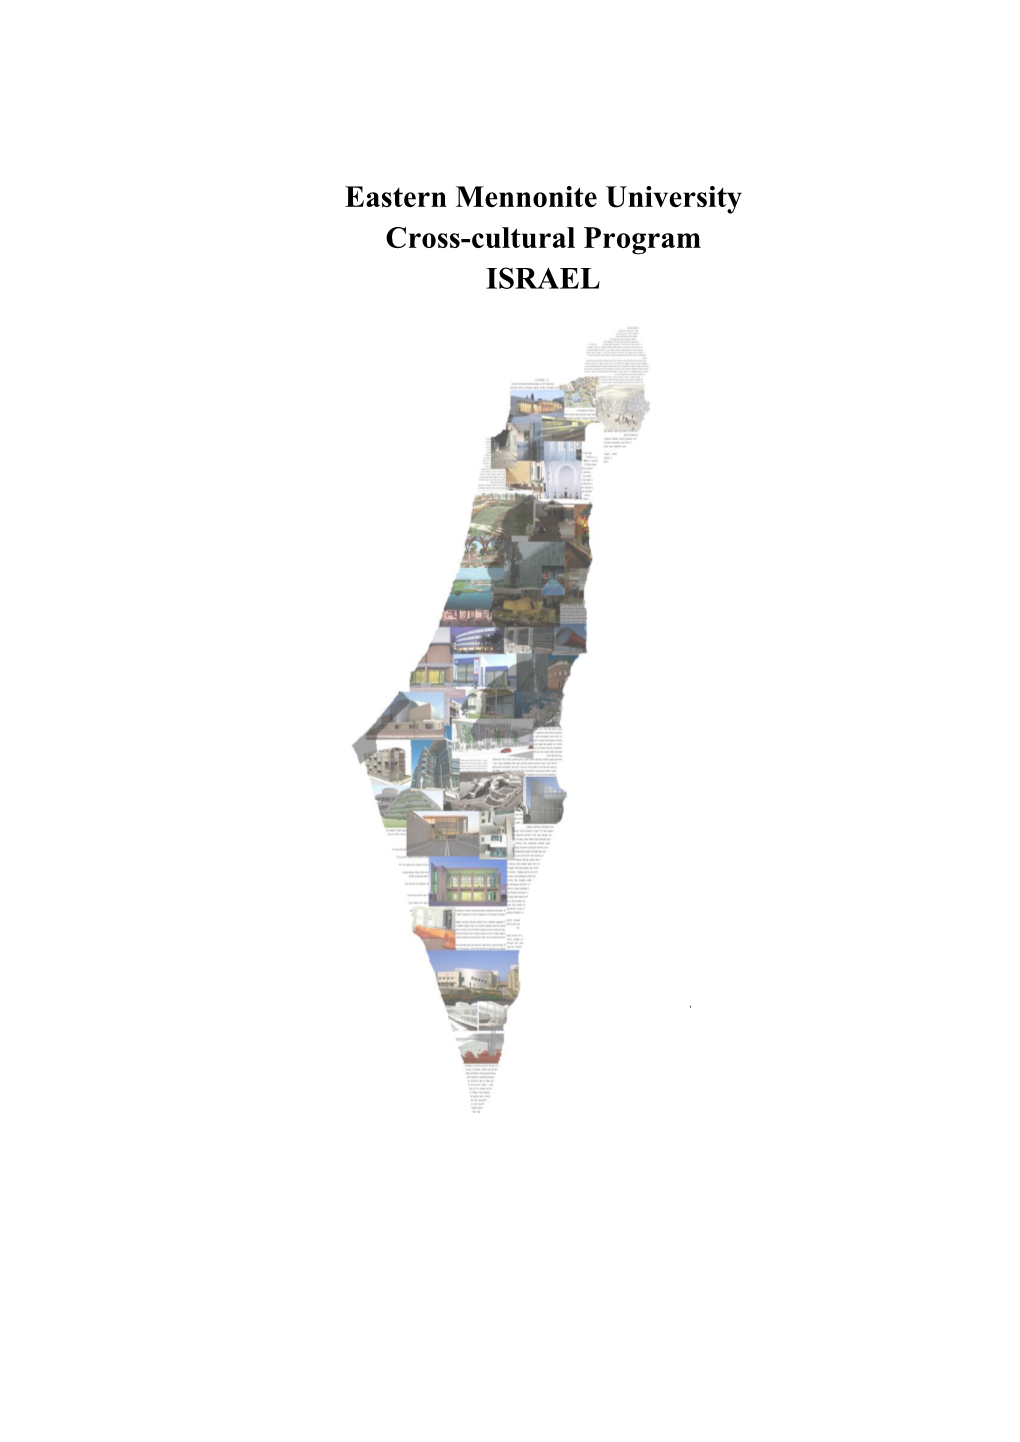 Eastern Mennonite University Cross-Cultural Program ISRAEL